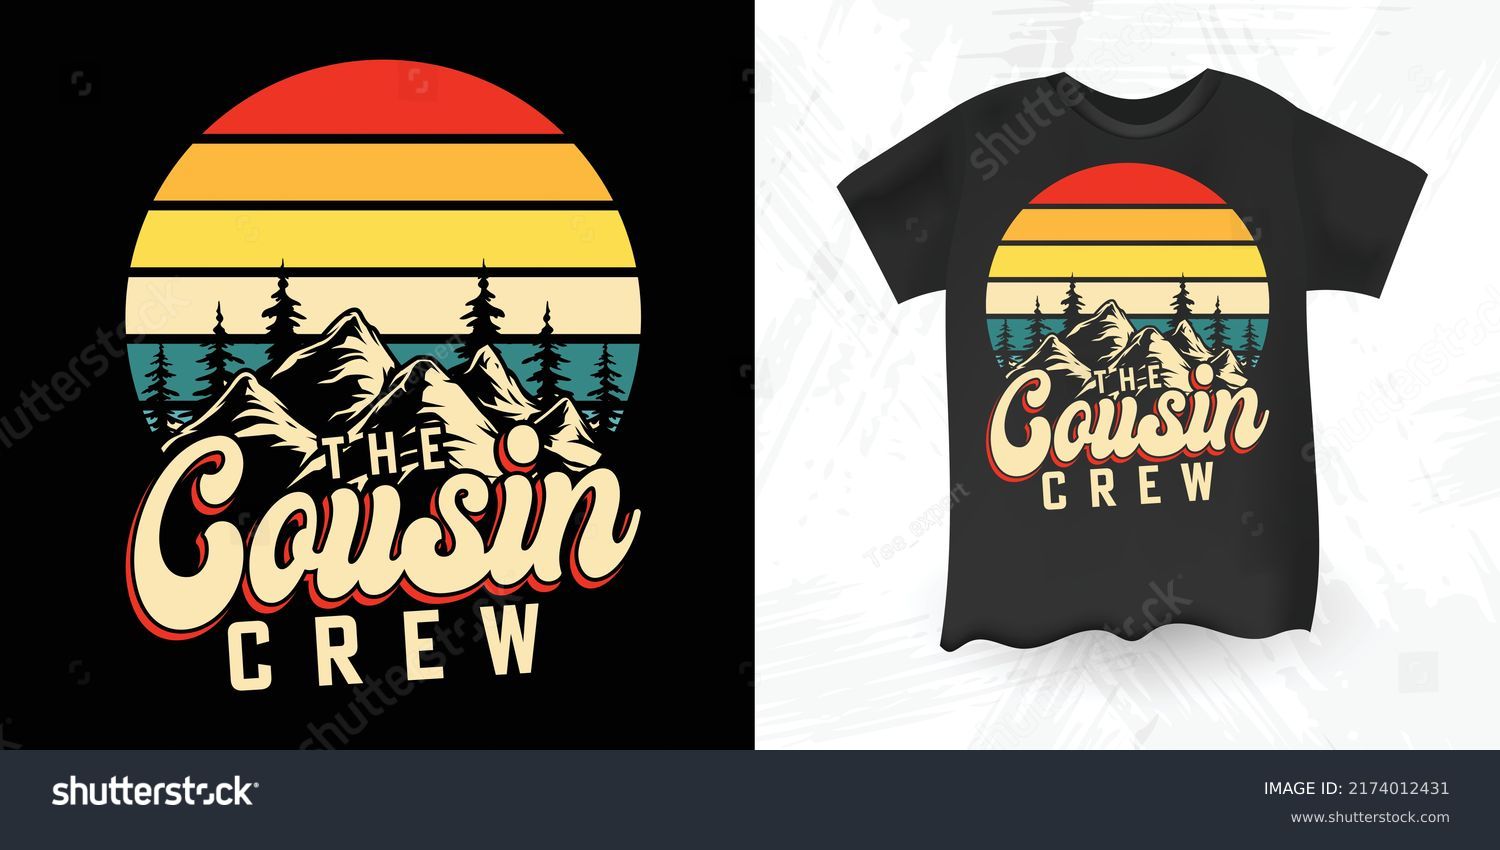 SVG of Cousin Crew Funny Outdoor Vintage Camper Camping RV T-shirt Design svg